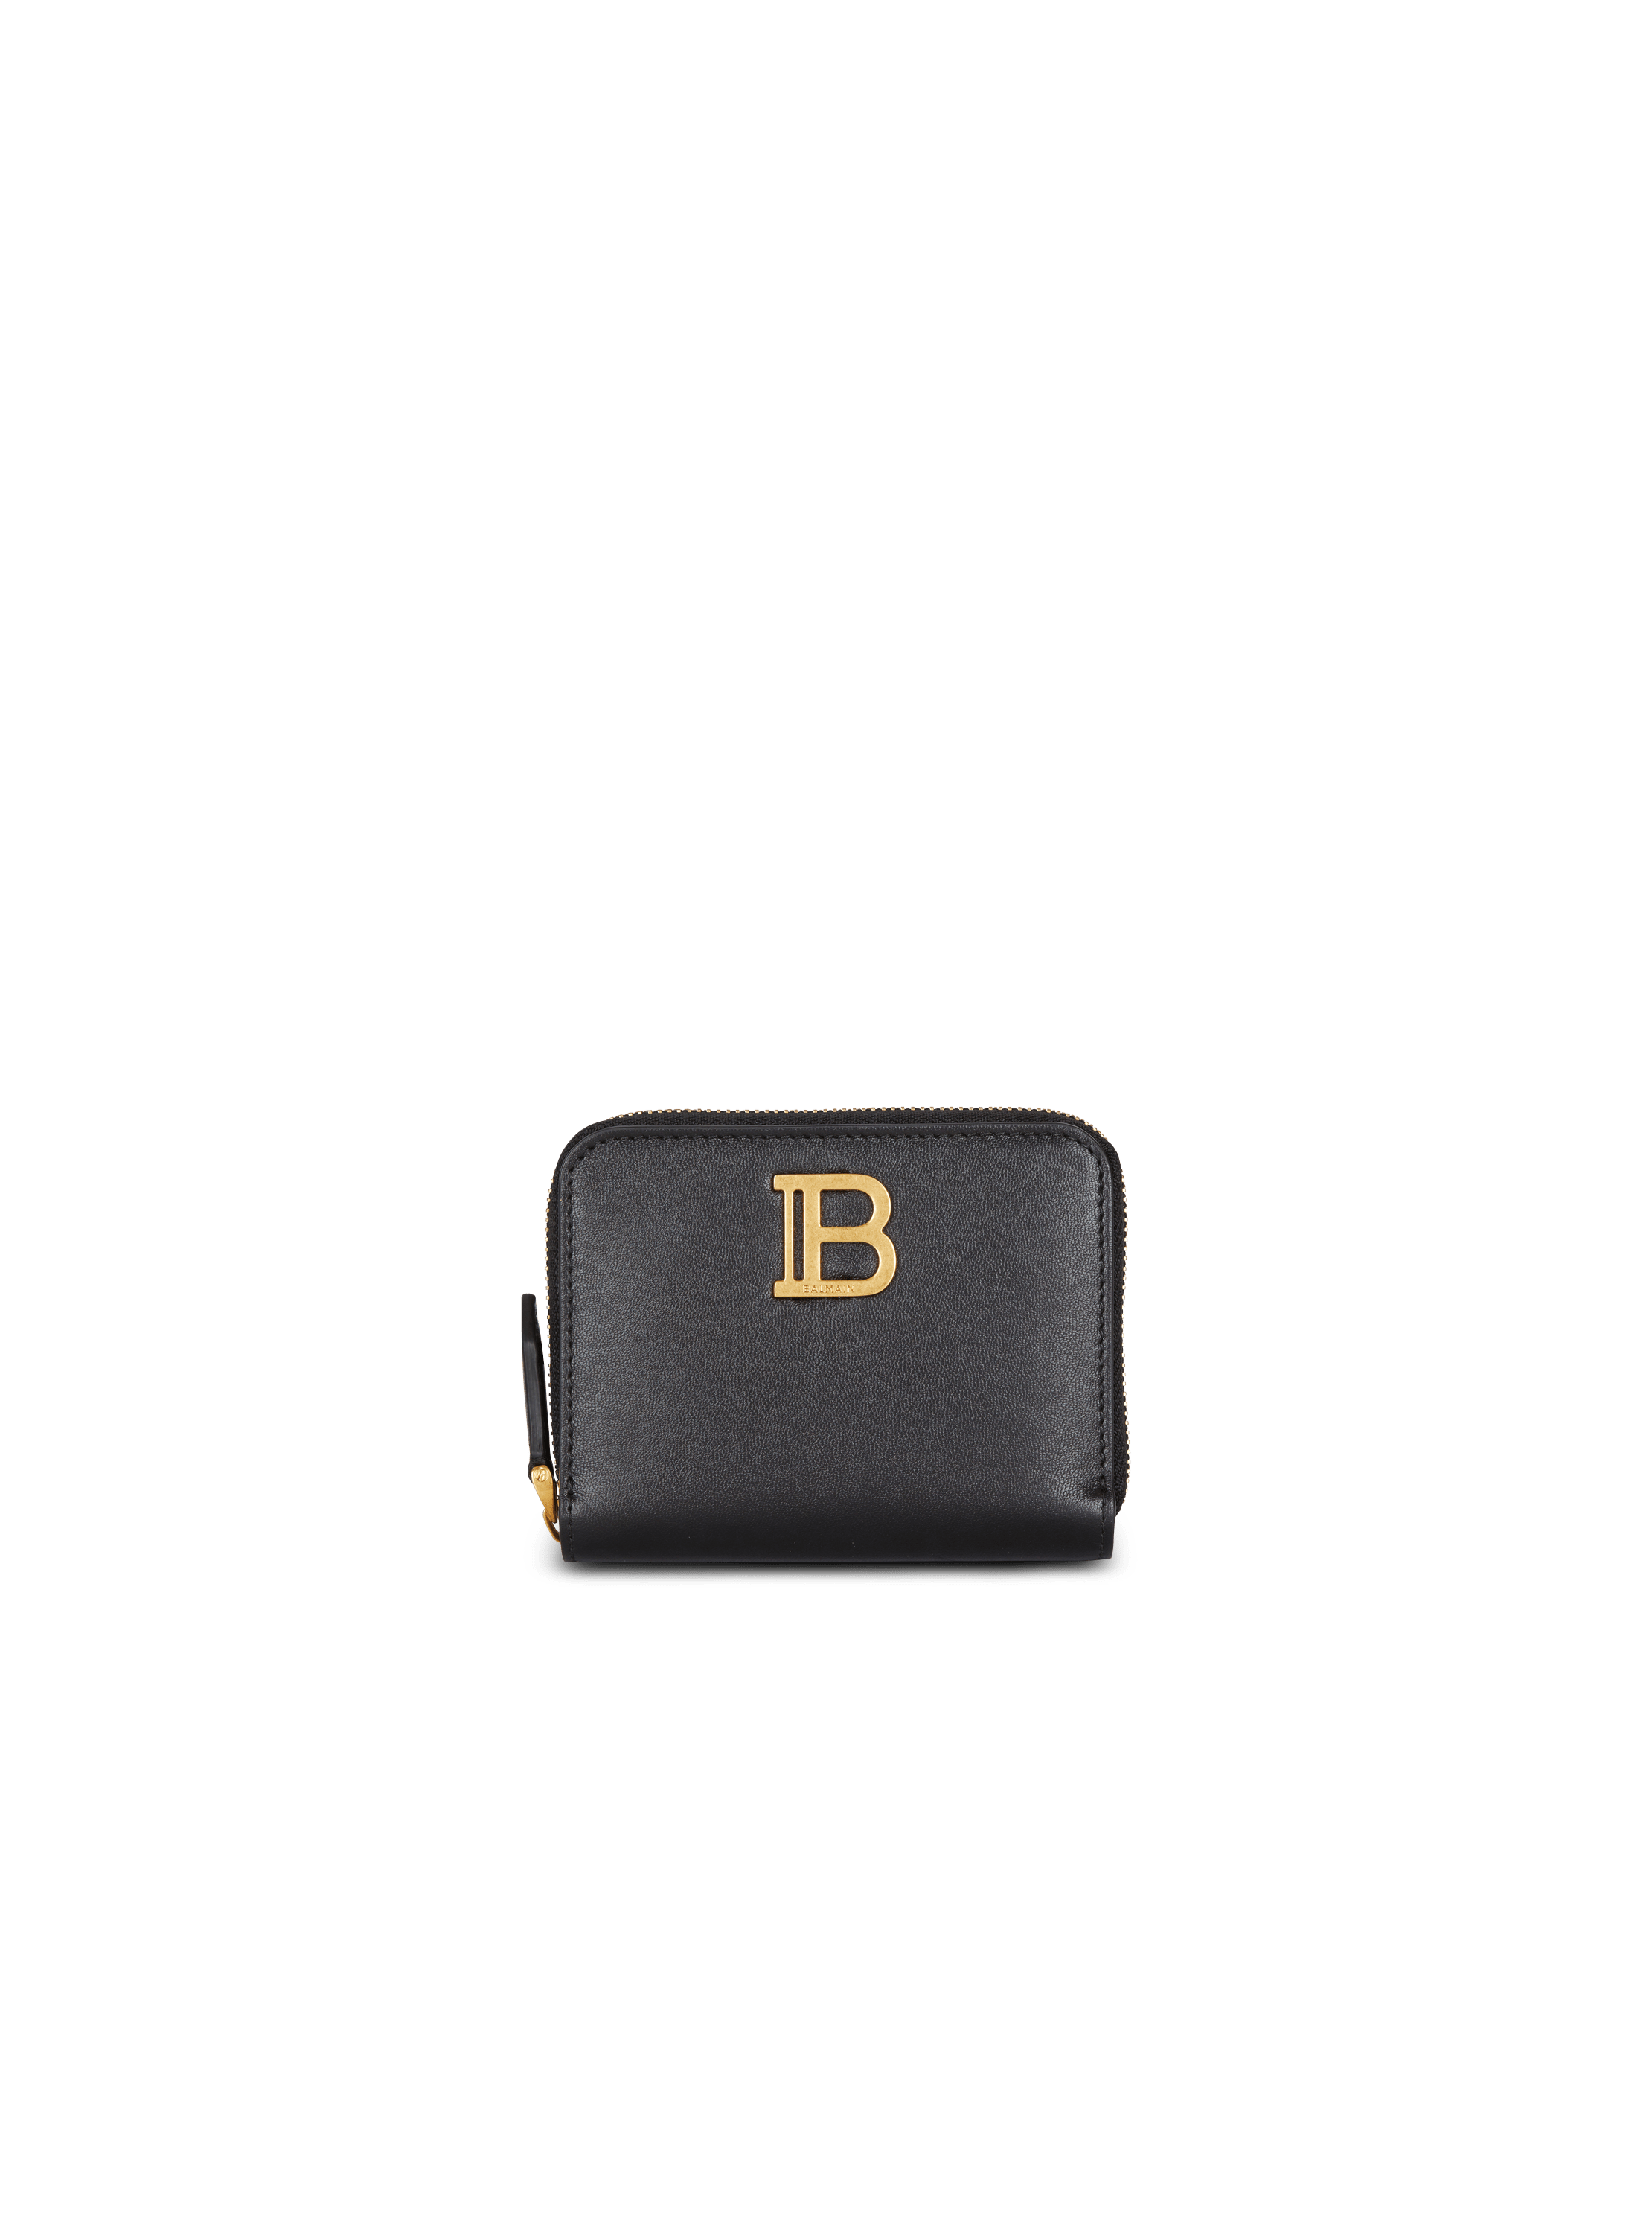 B-Buzz leather purse